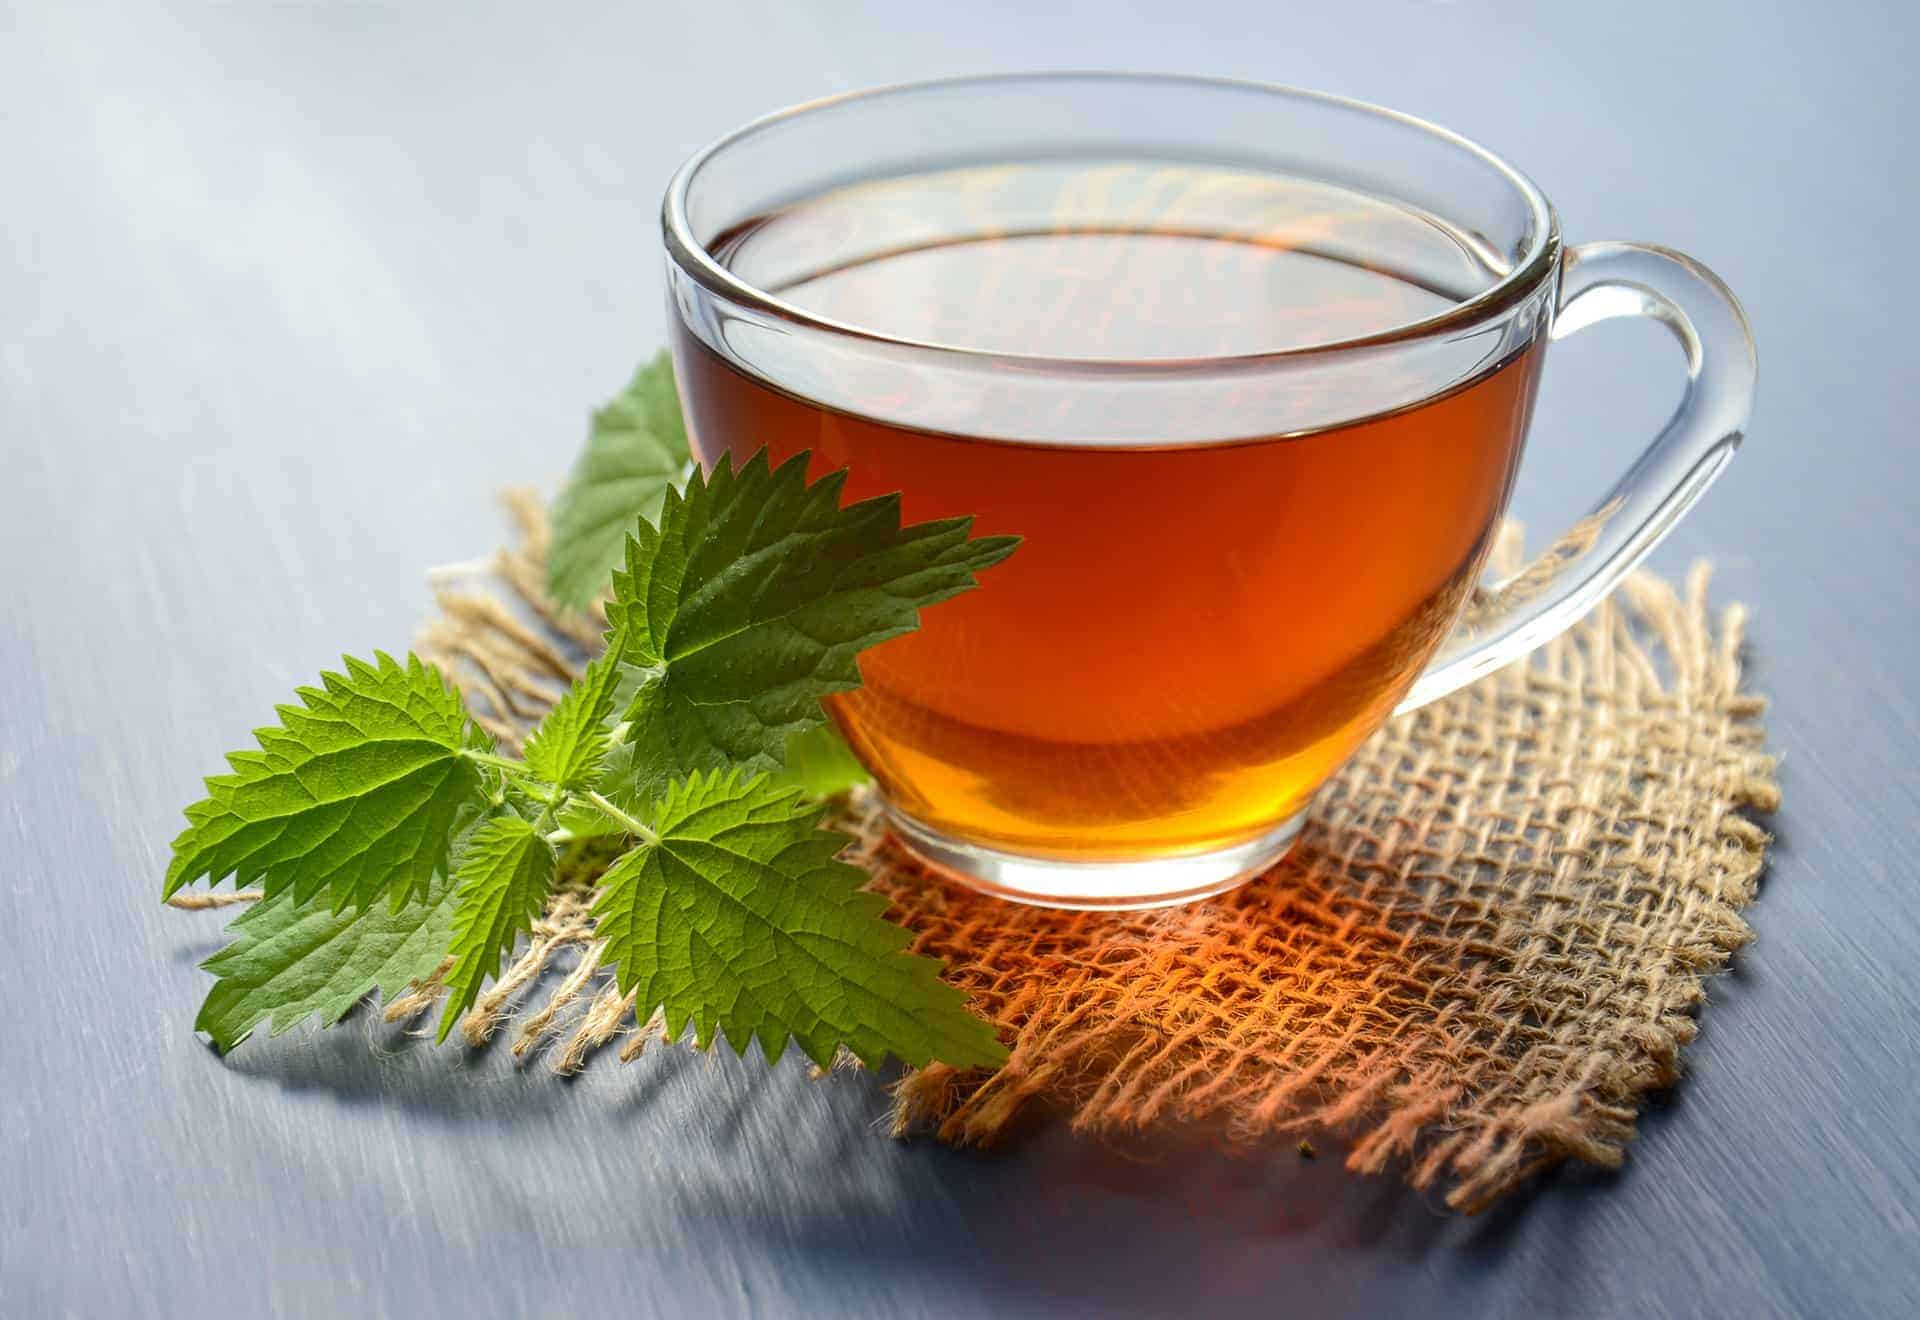 15 Amazing Health Benefits Of Peppermint Tea